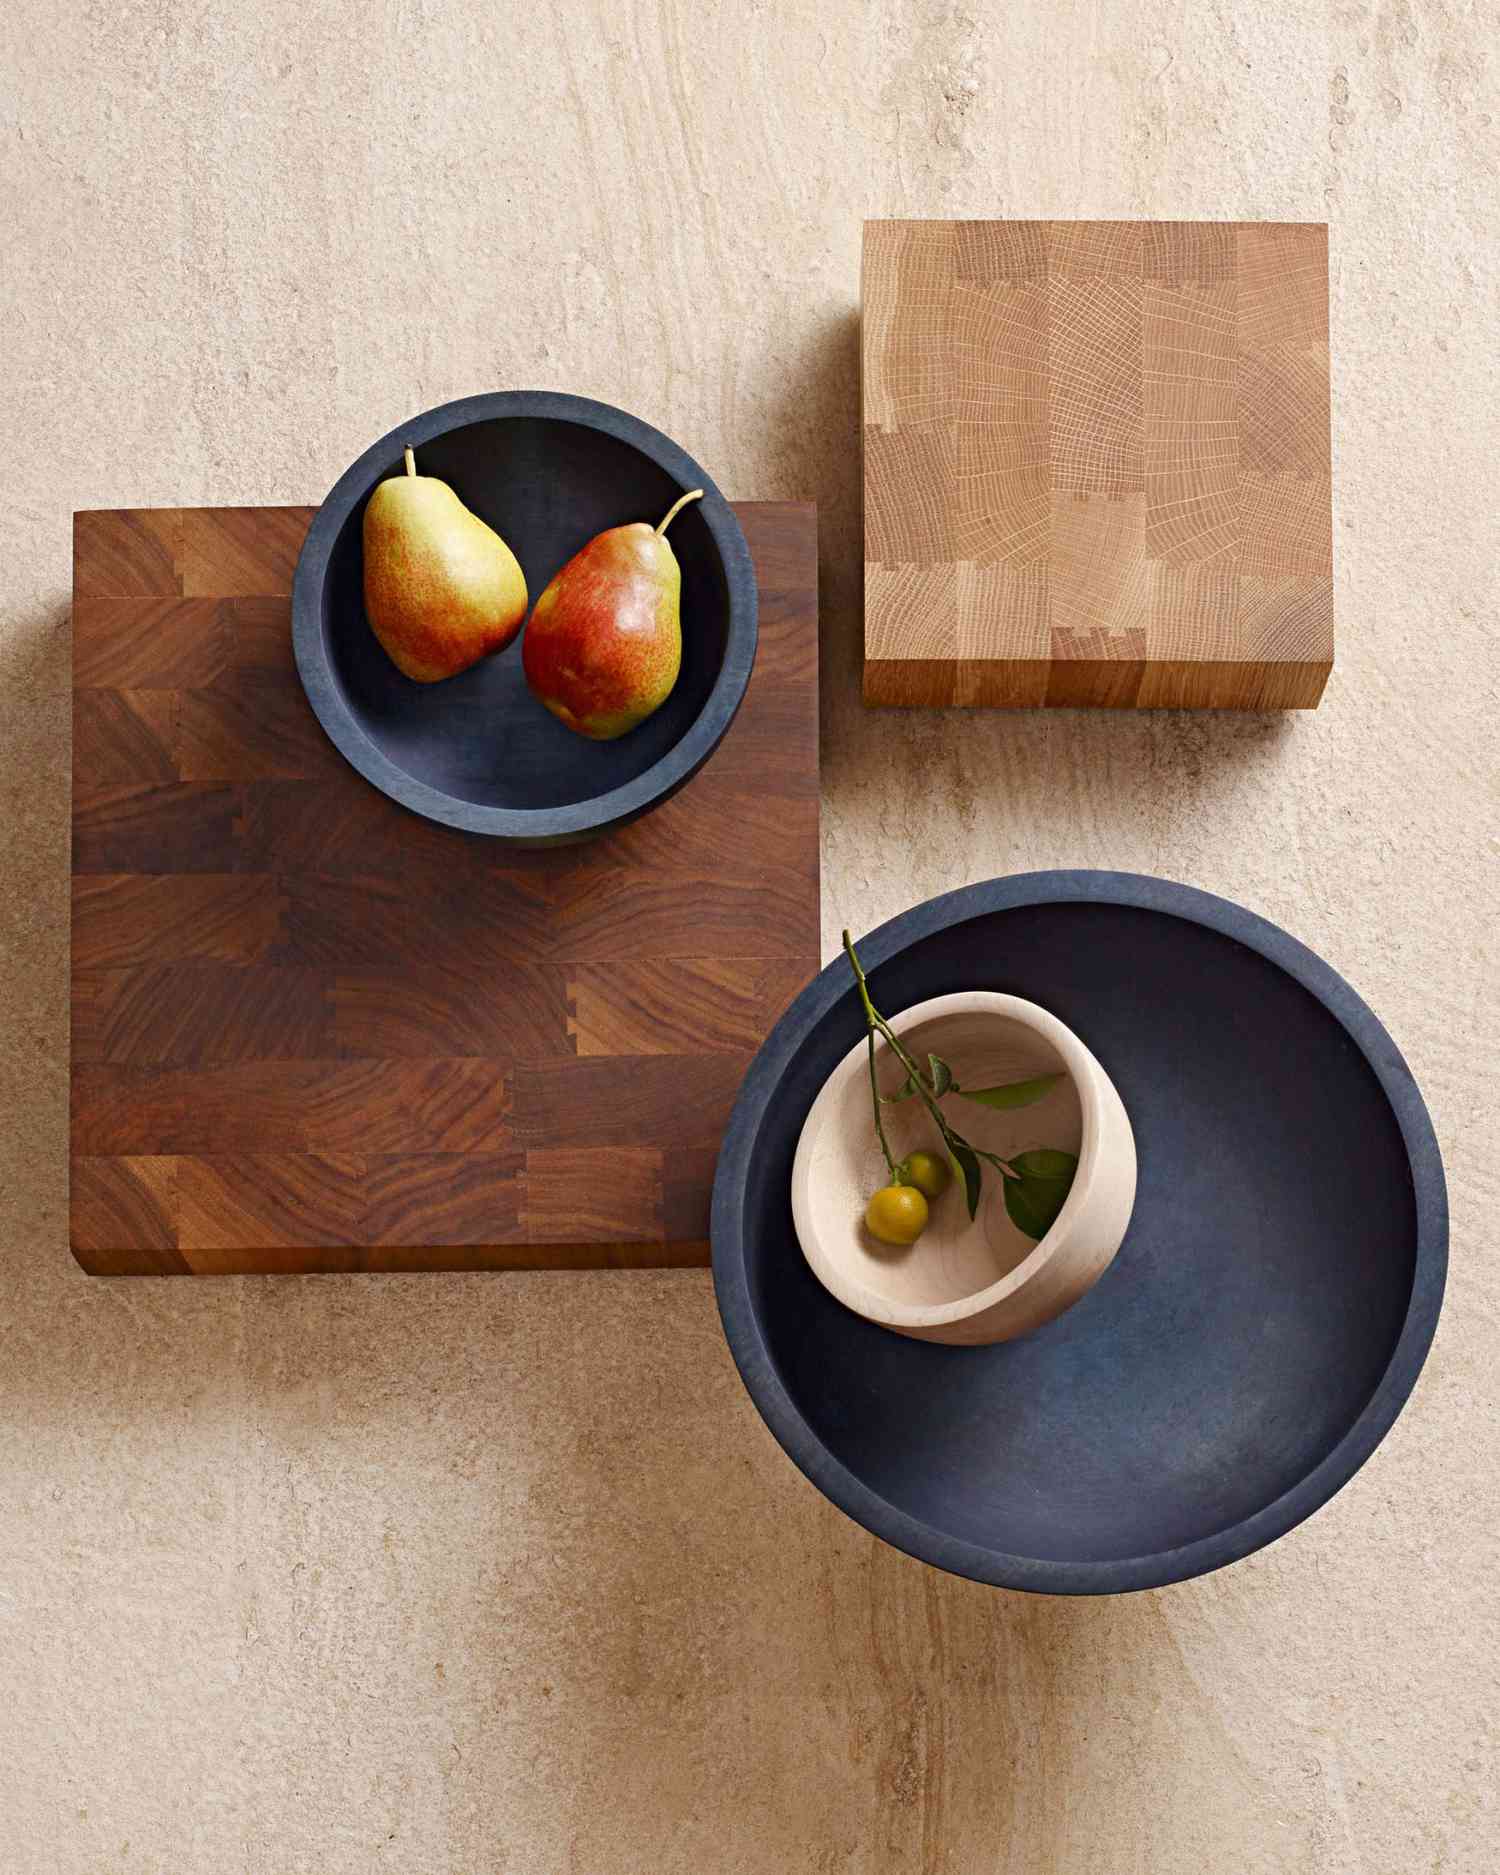 Silvia Song's wooden bowls and butcher blocks